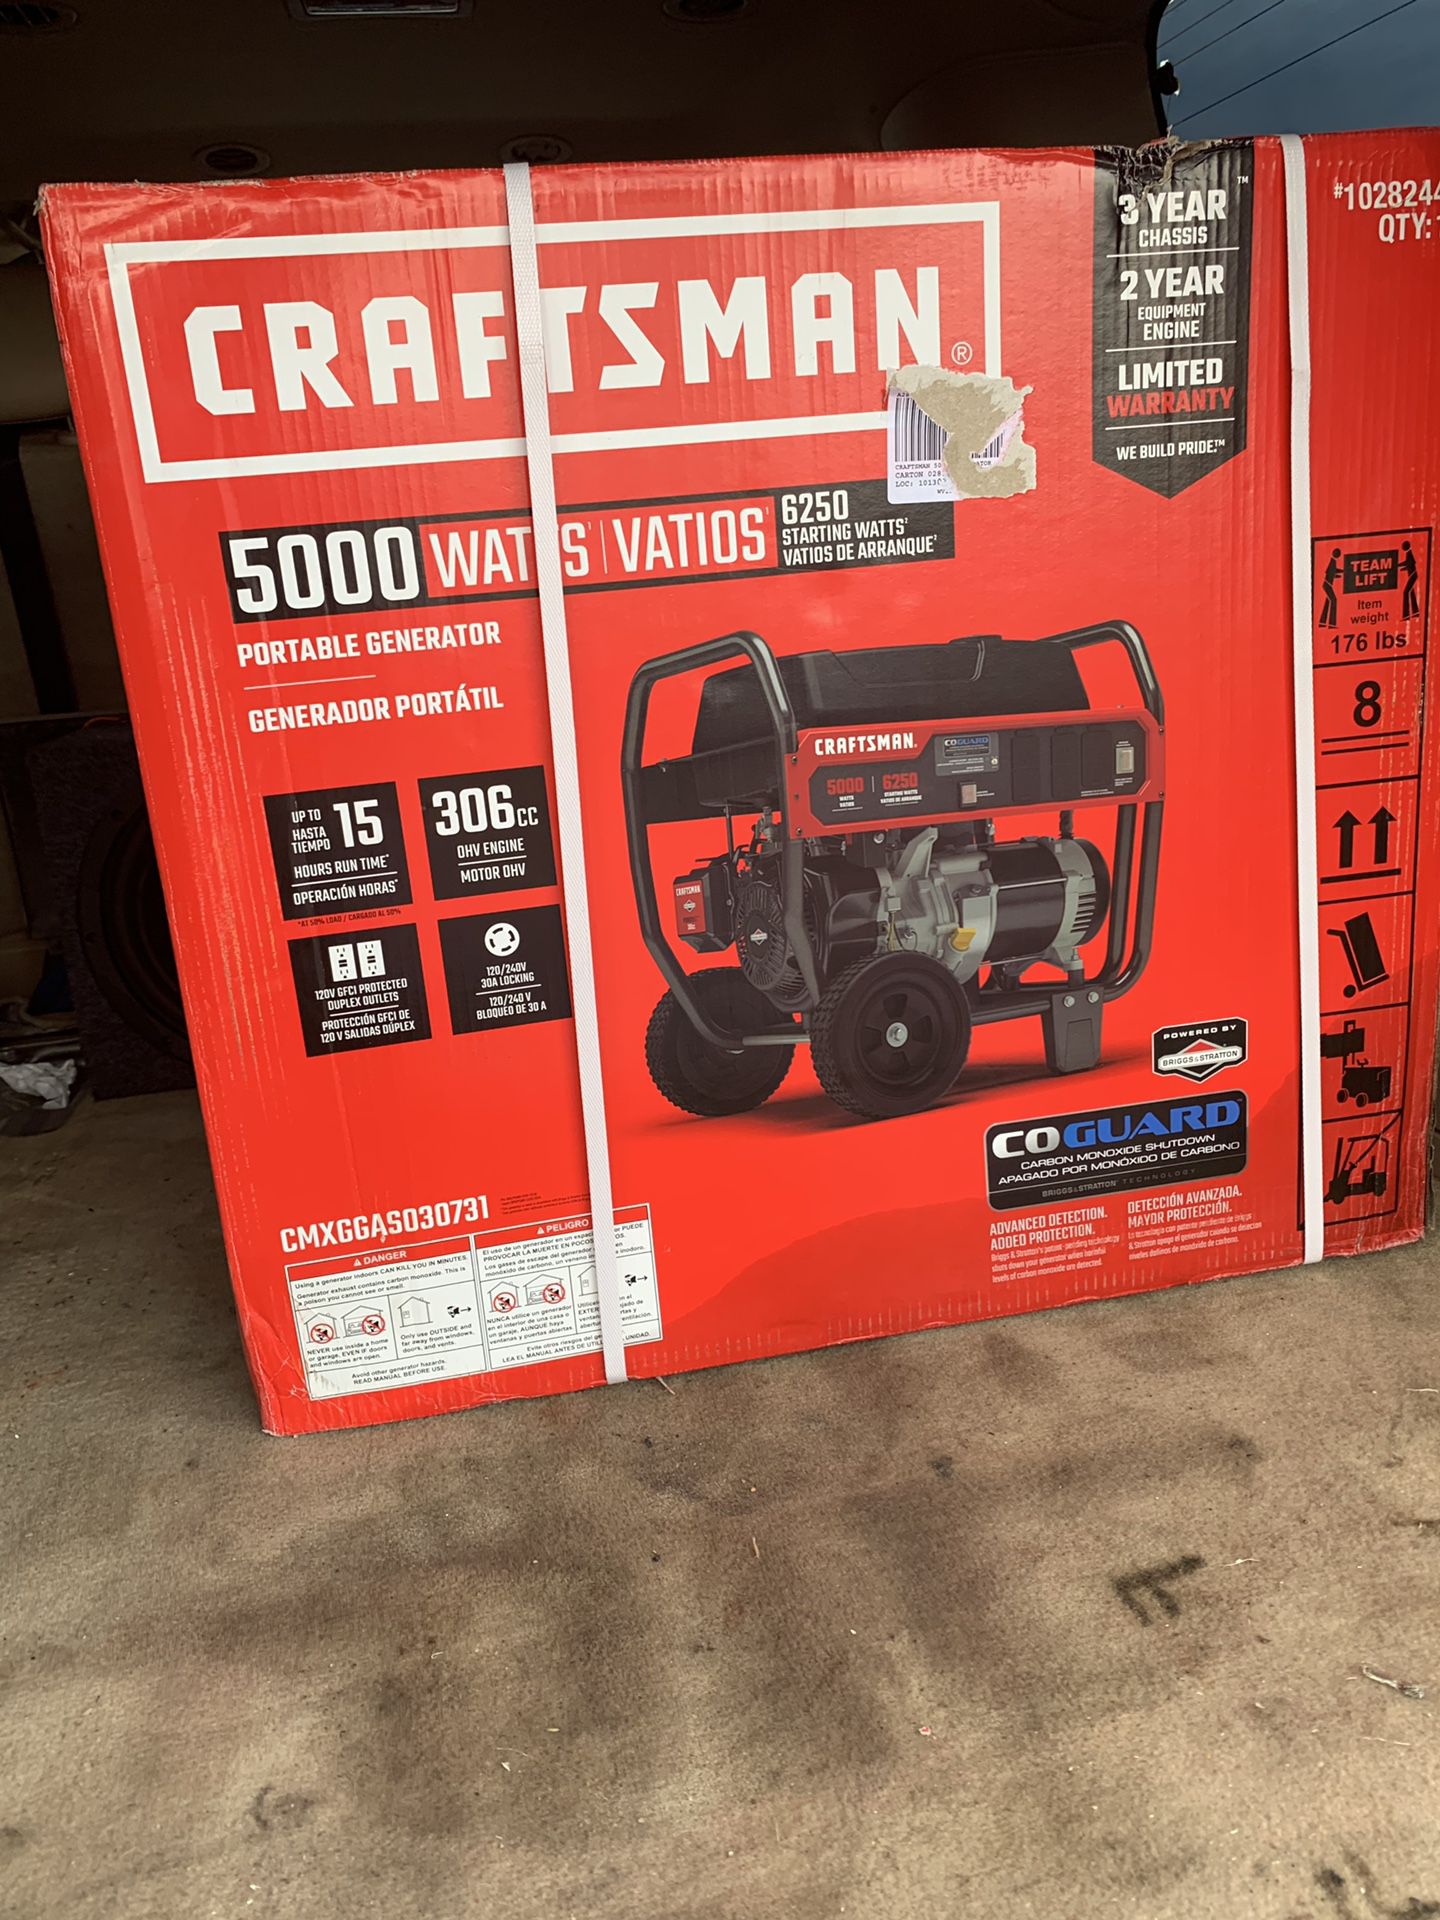 Craftsman 5000 watts generator